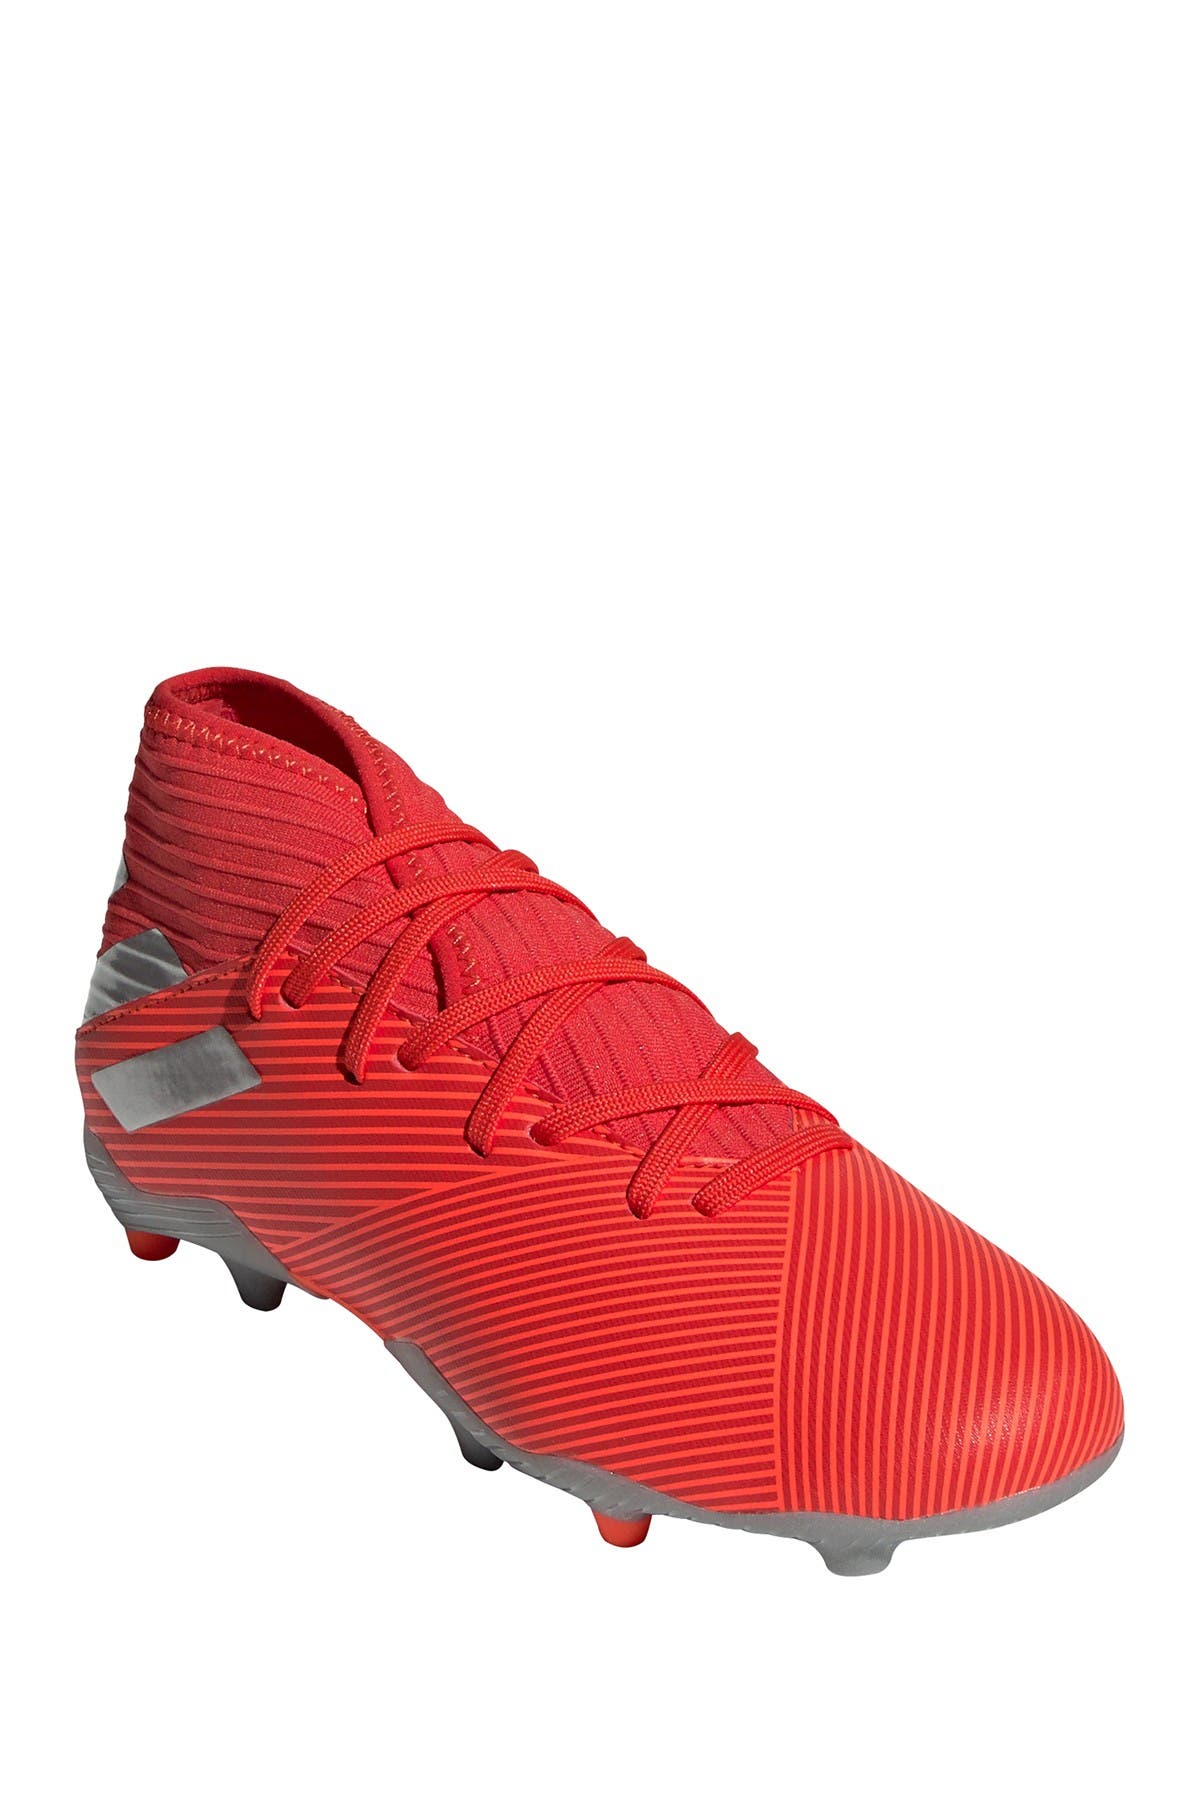 adidas nemeziz 19.3 firm ground boots